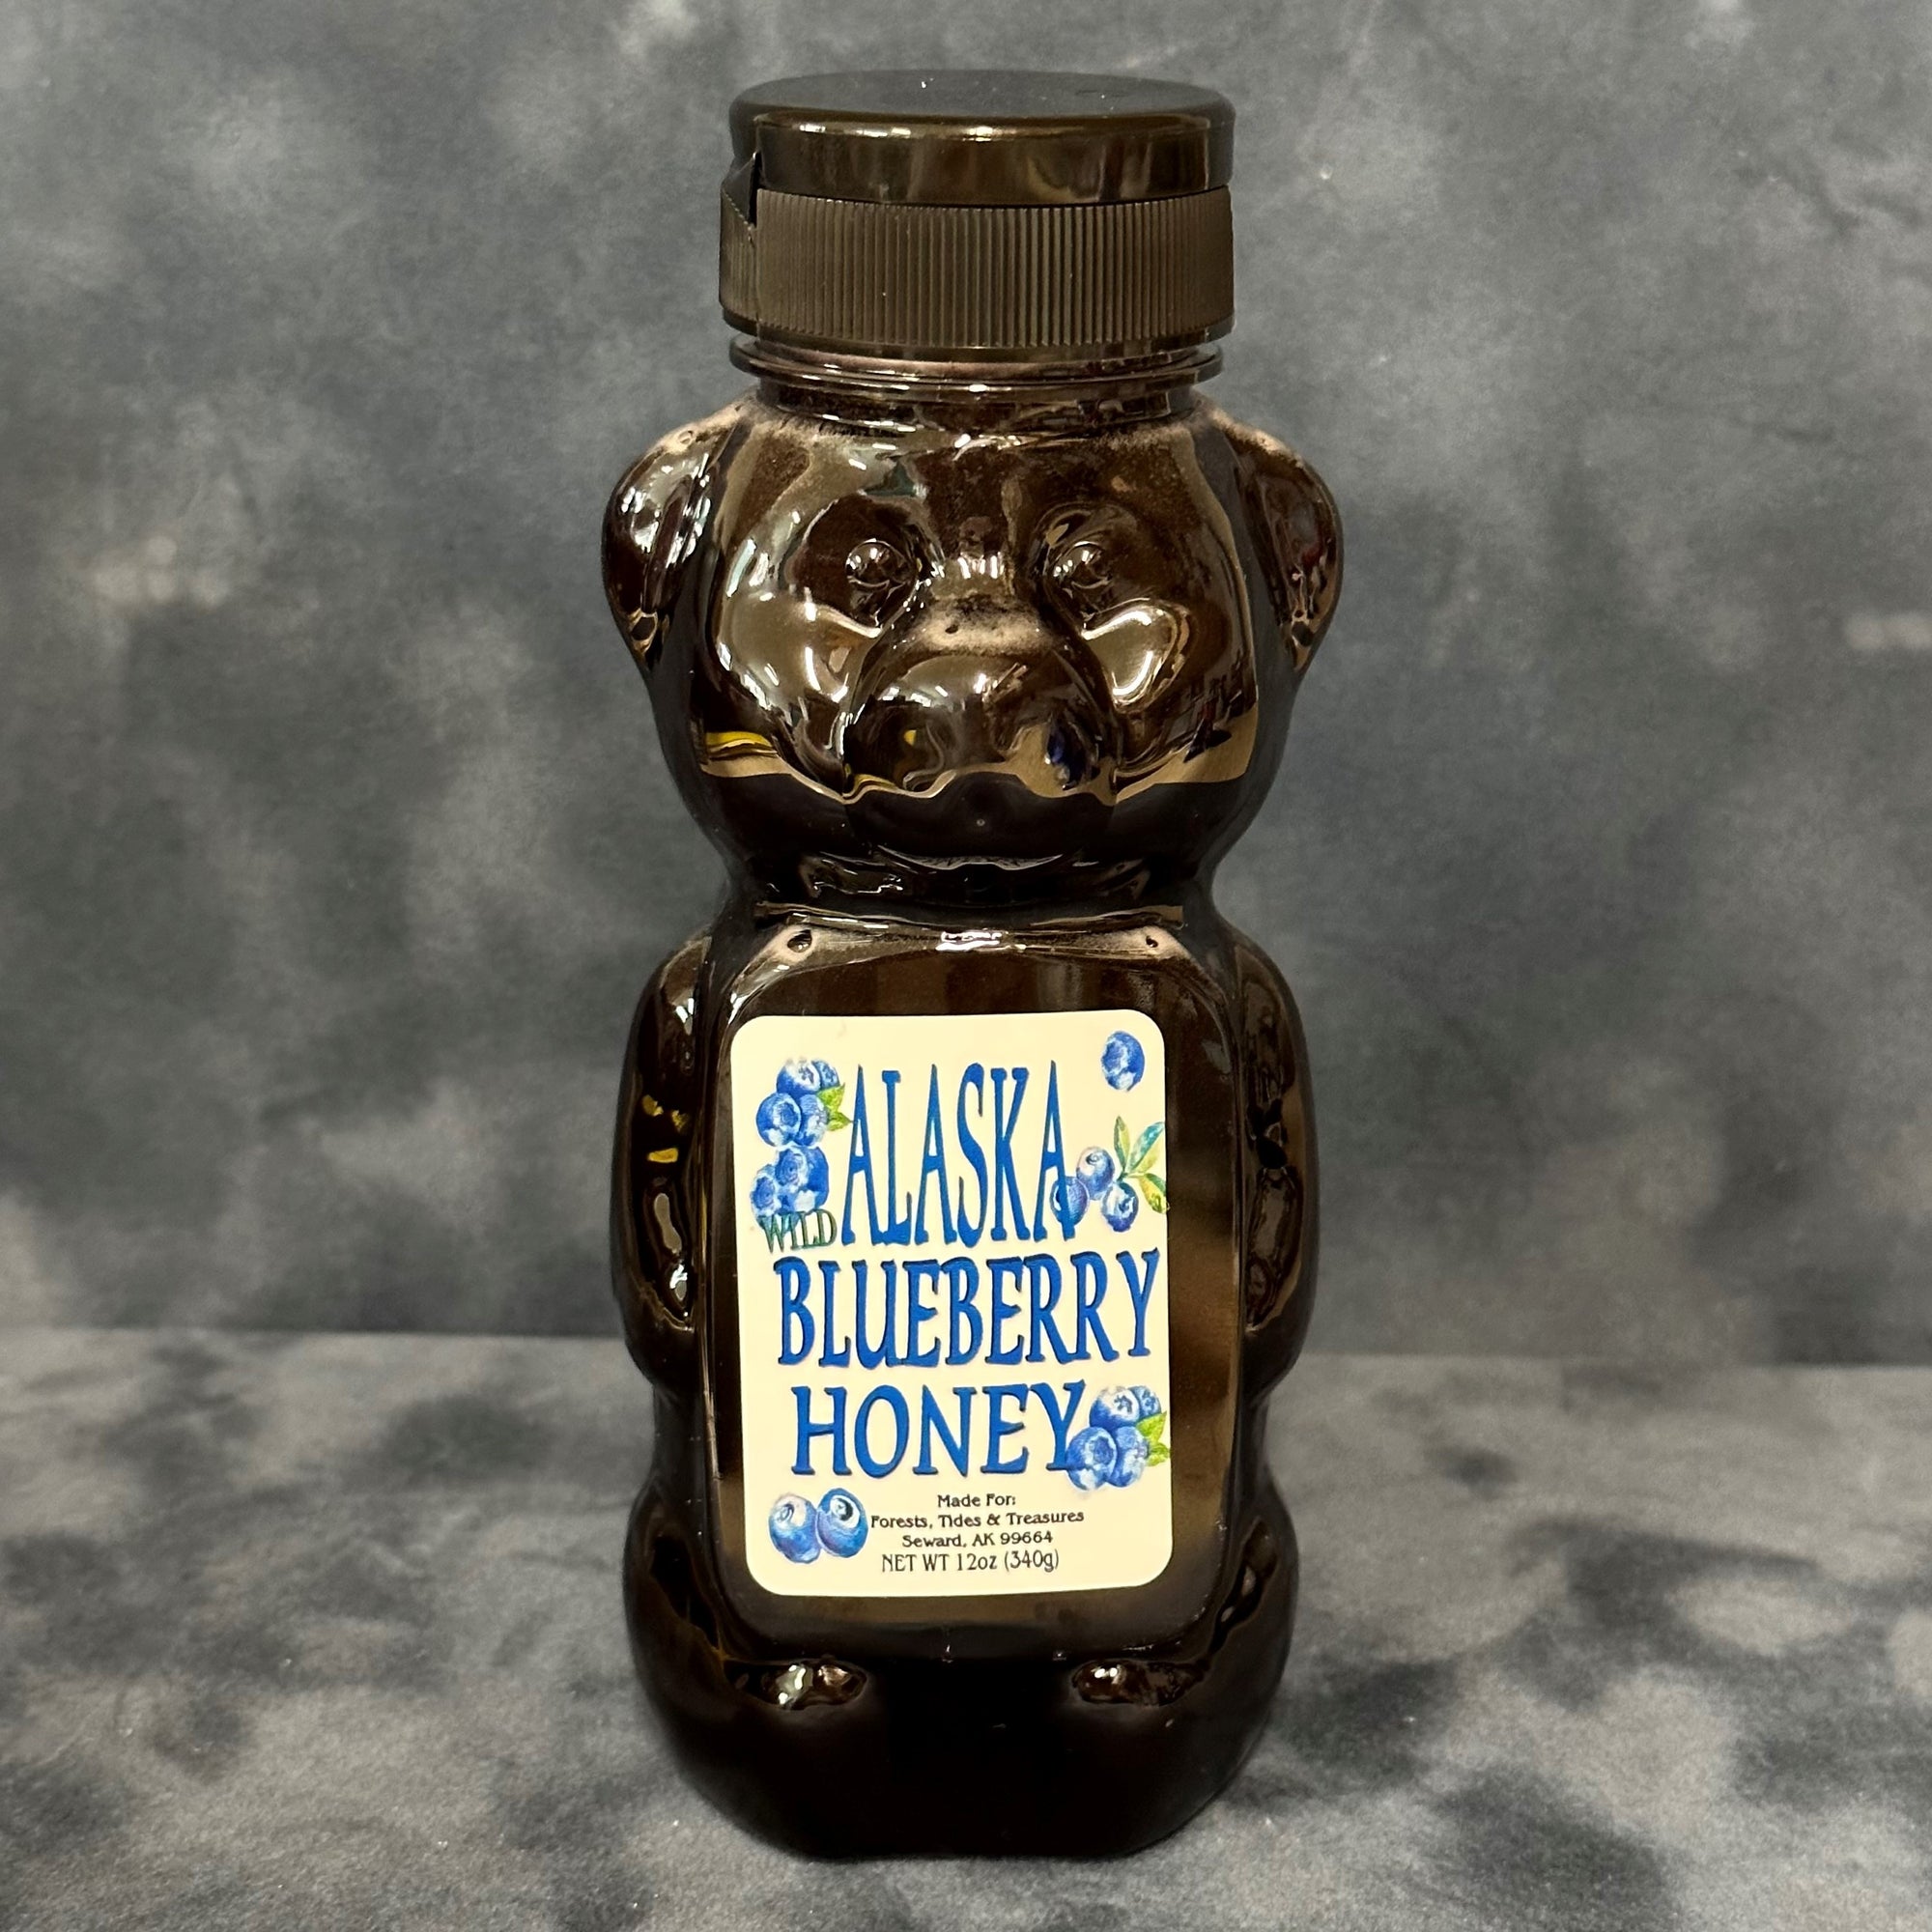 Blueberry Honey Bear - 12oz